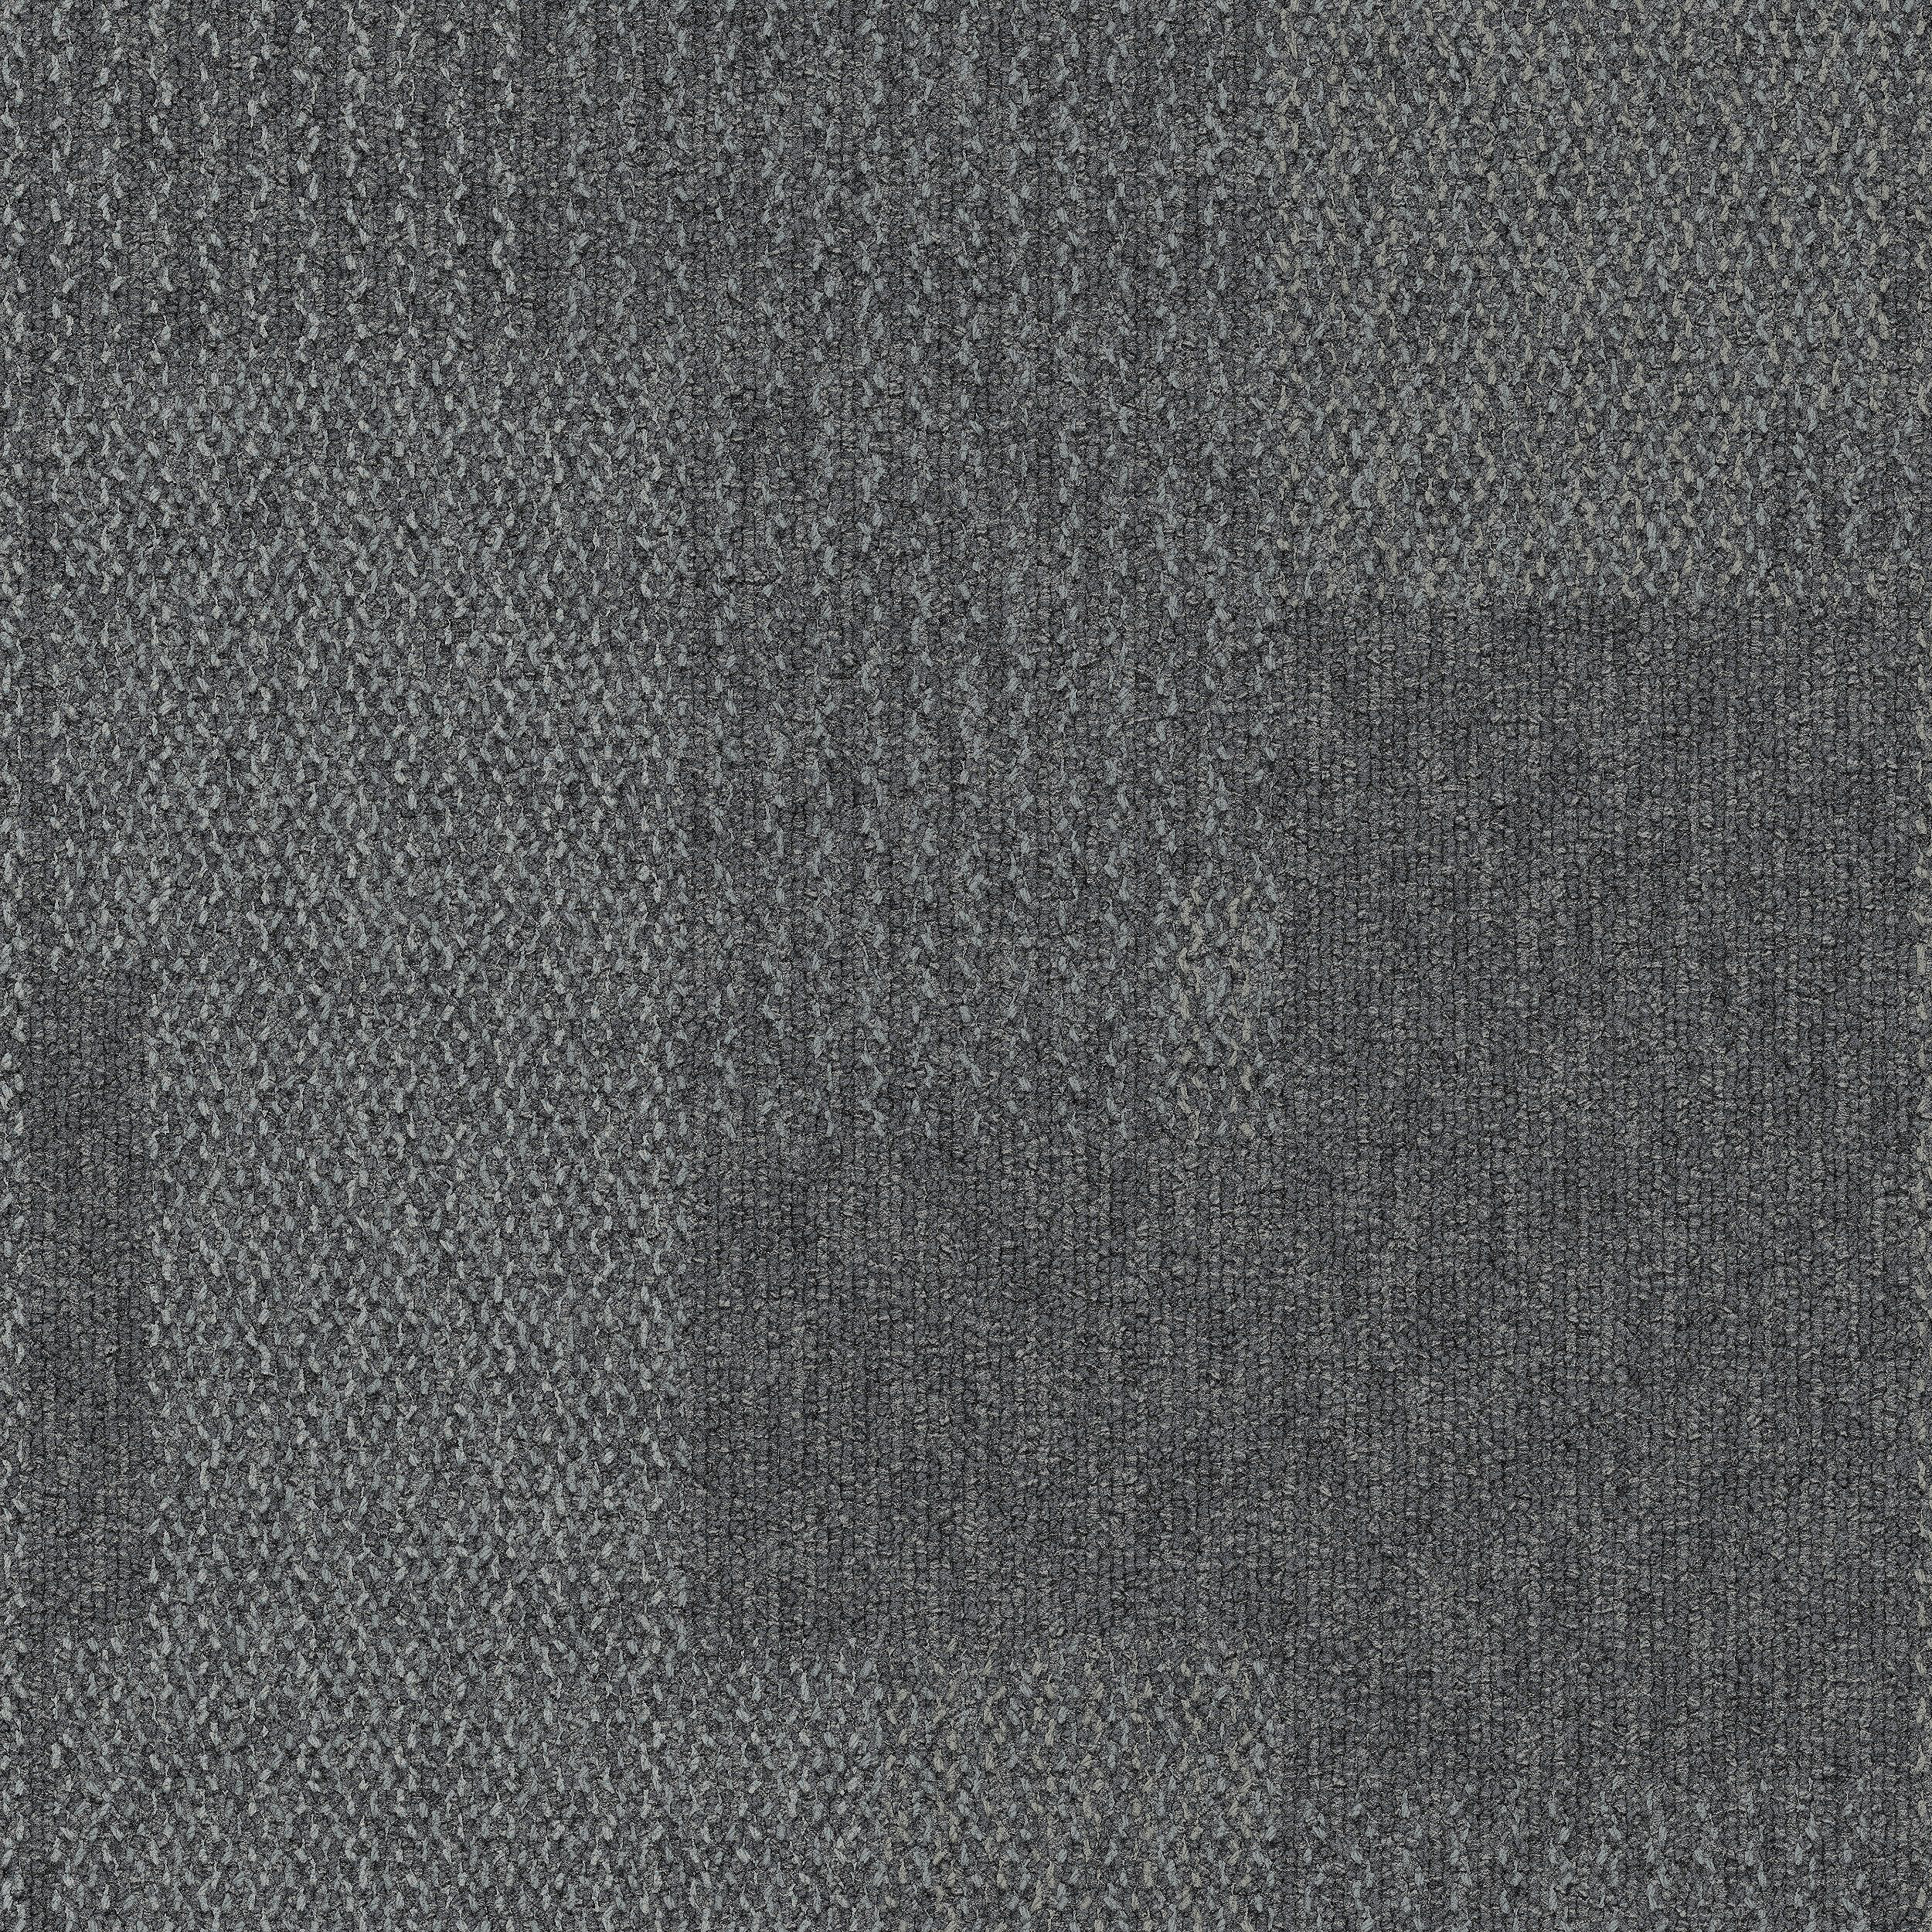 Transformation Carpet Tile In Gabbro número de imagen 7